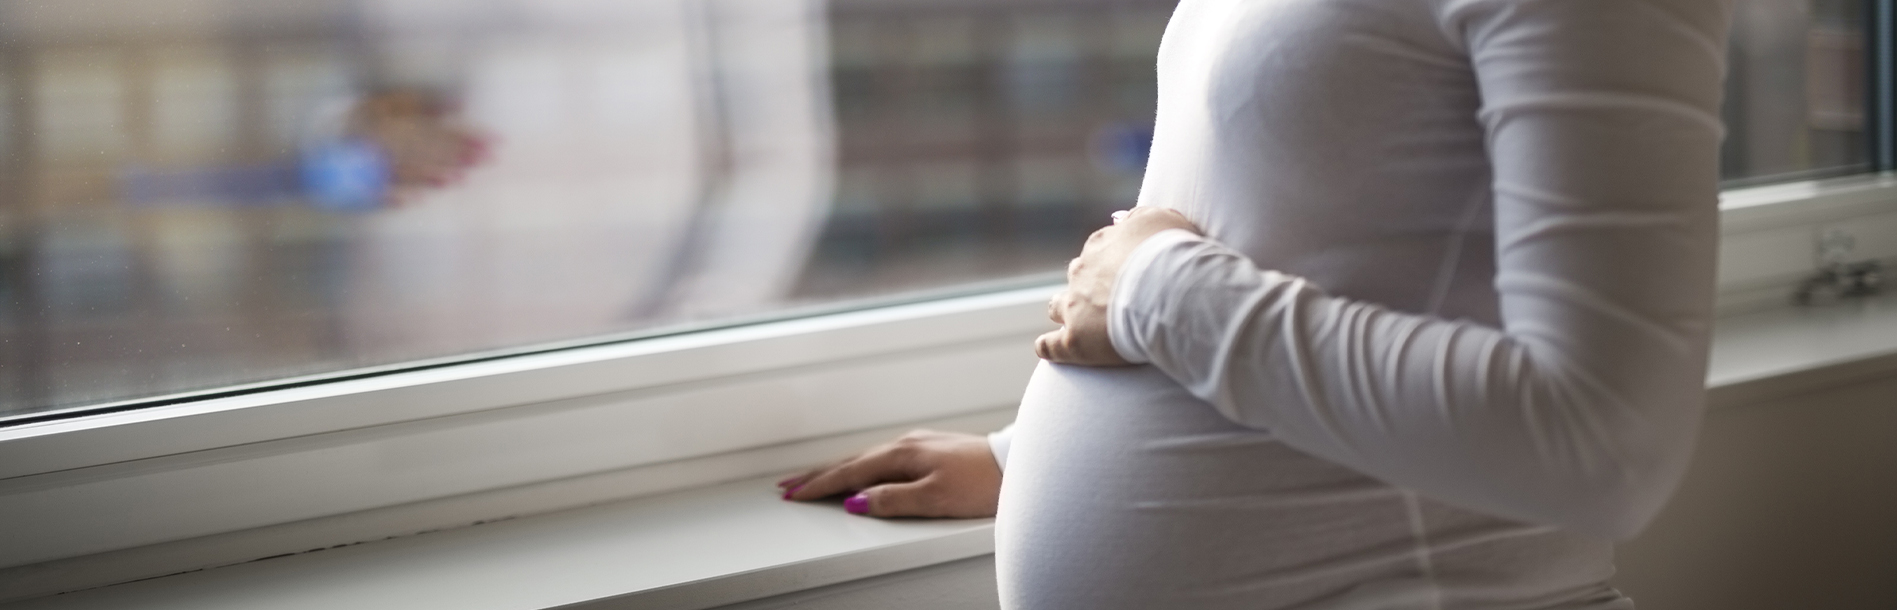 Sangramento durante a gravidez: devo me preocupar?